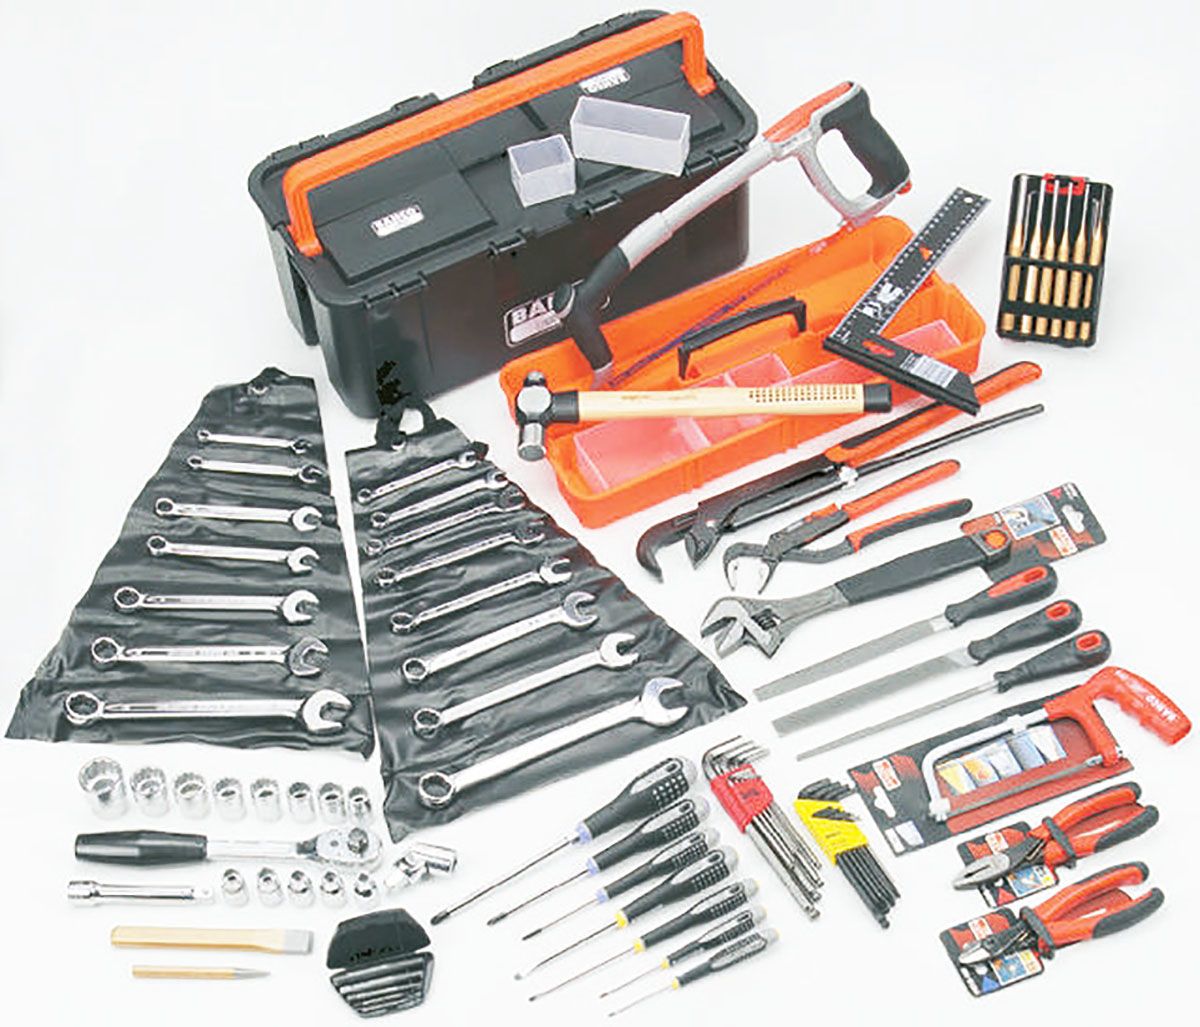 Bahco 86 Piece Engineers Tool Kit with Box